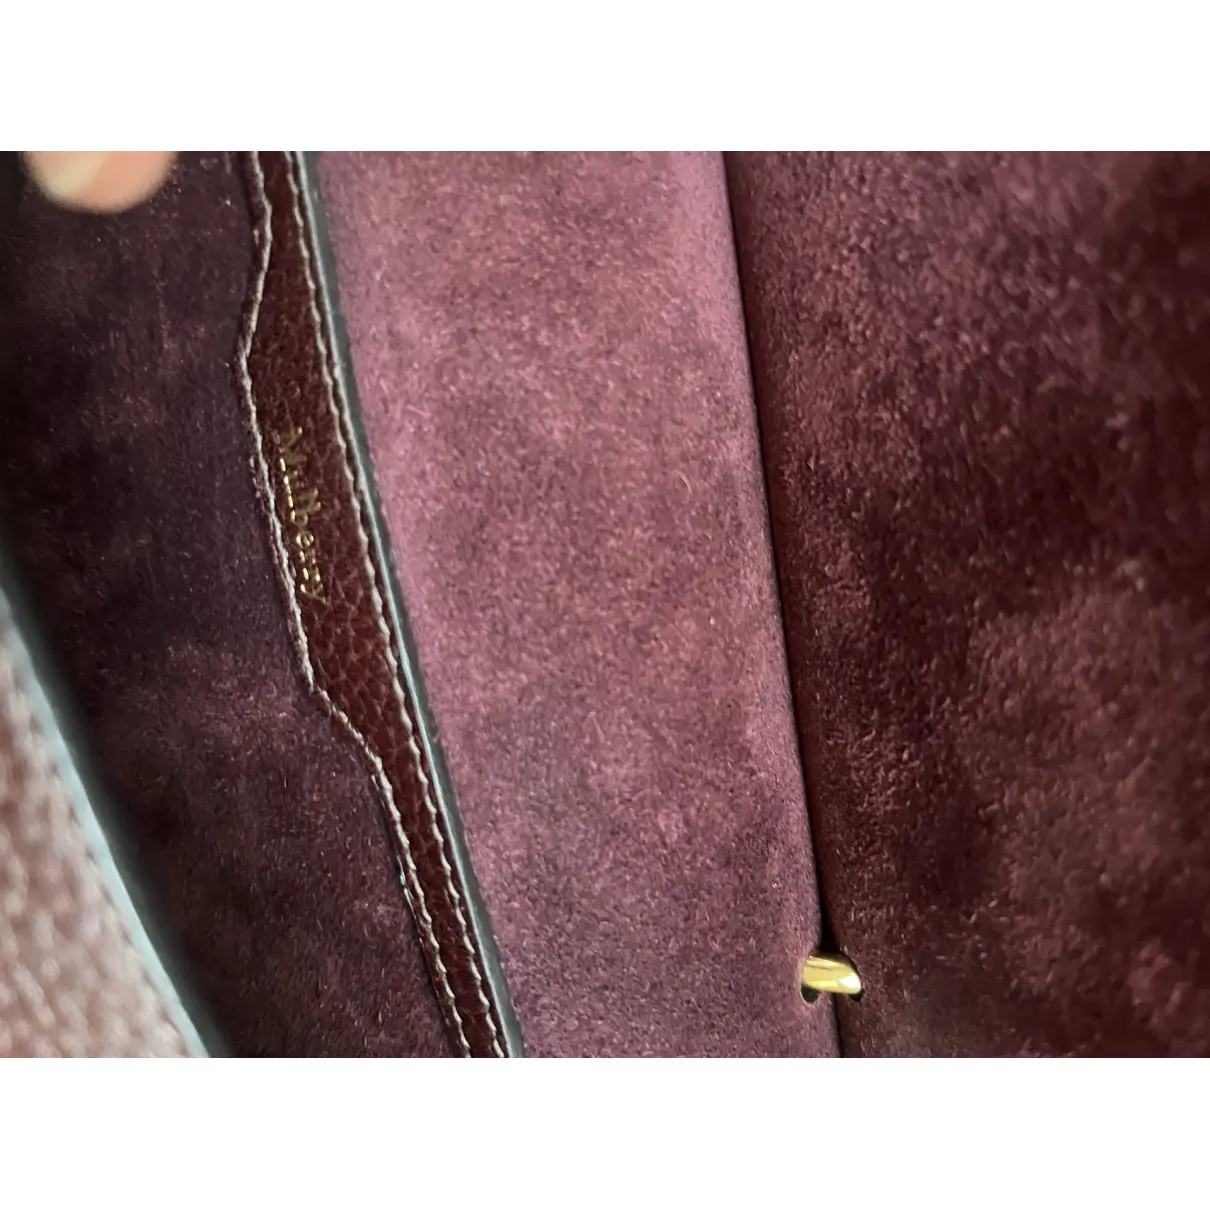 Amberley leather crossbody bag Mulberry